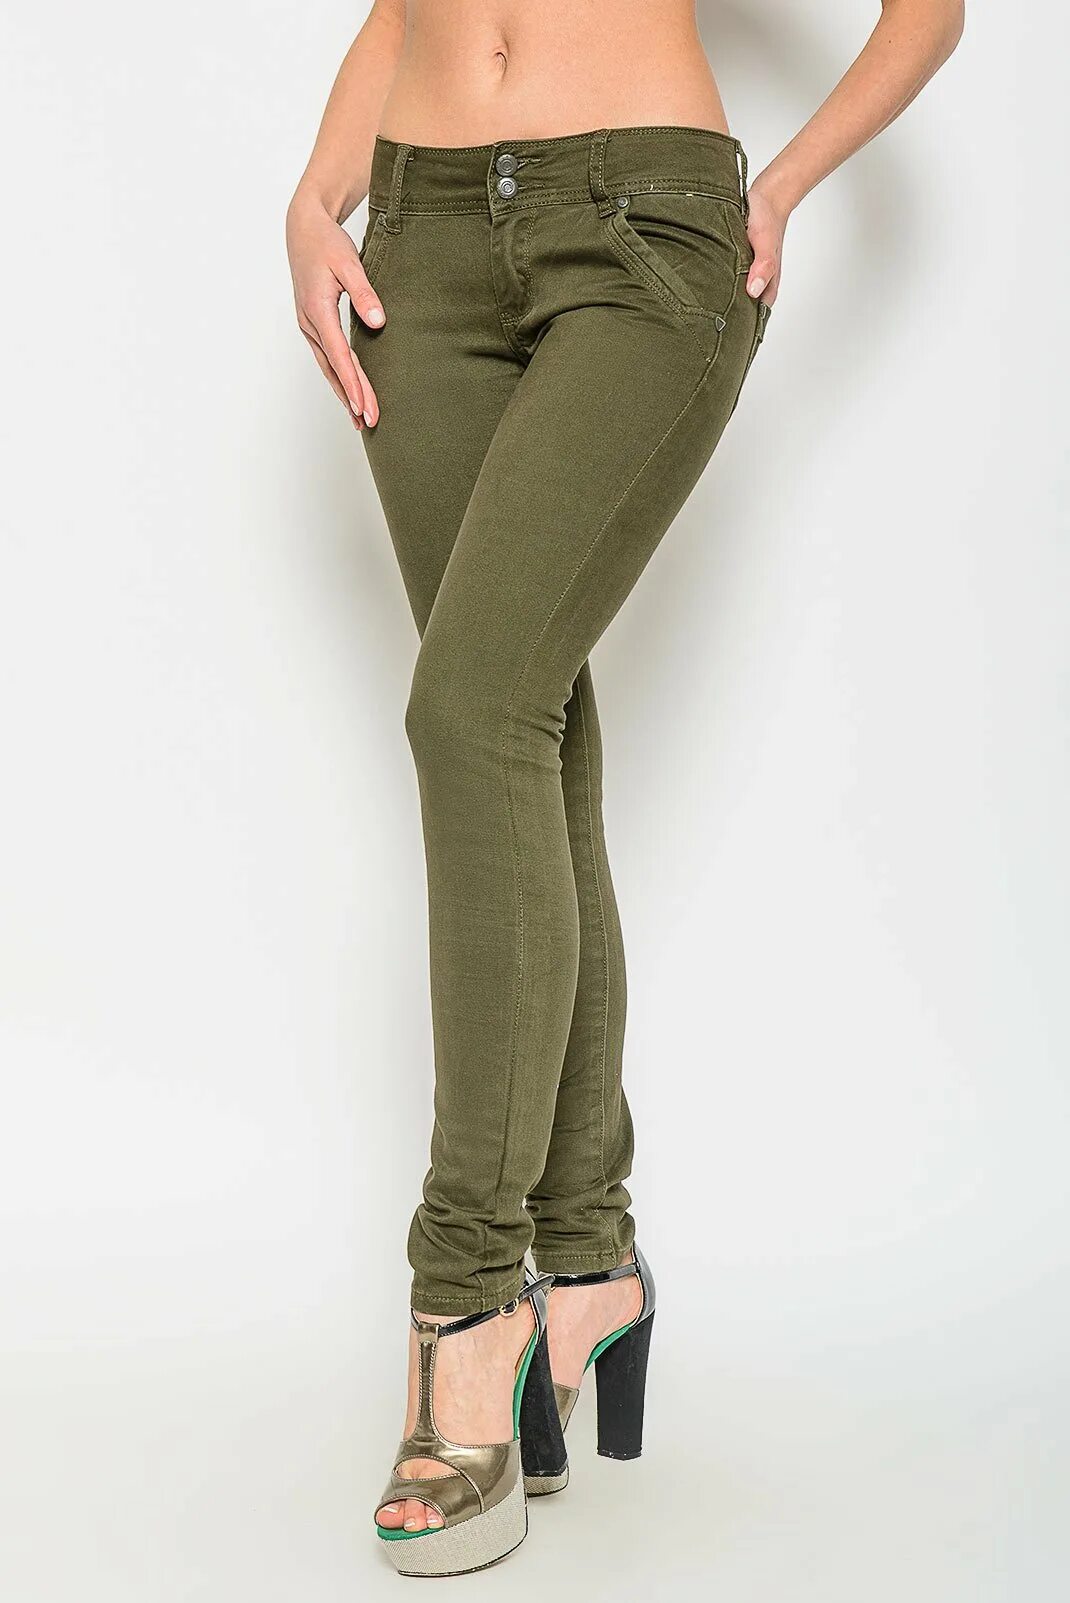 Как выглядят хаки. Остин брюки женские хаки lp2y41. Брюки Lime хаки. G-Star штаны джинсы хаки. Брюки 4631 [хаки] (размер: 42).